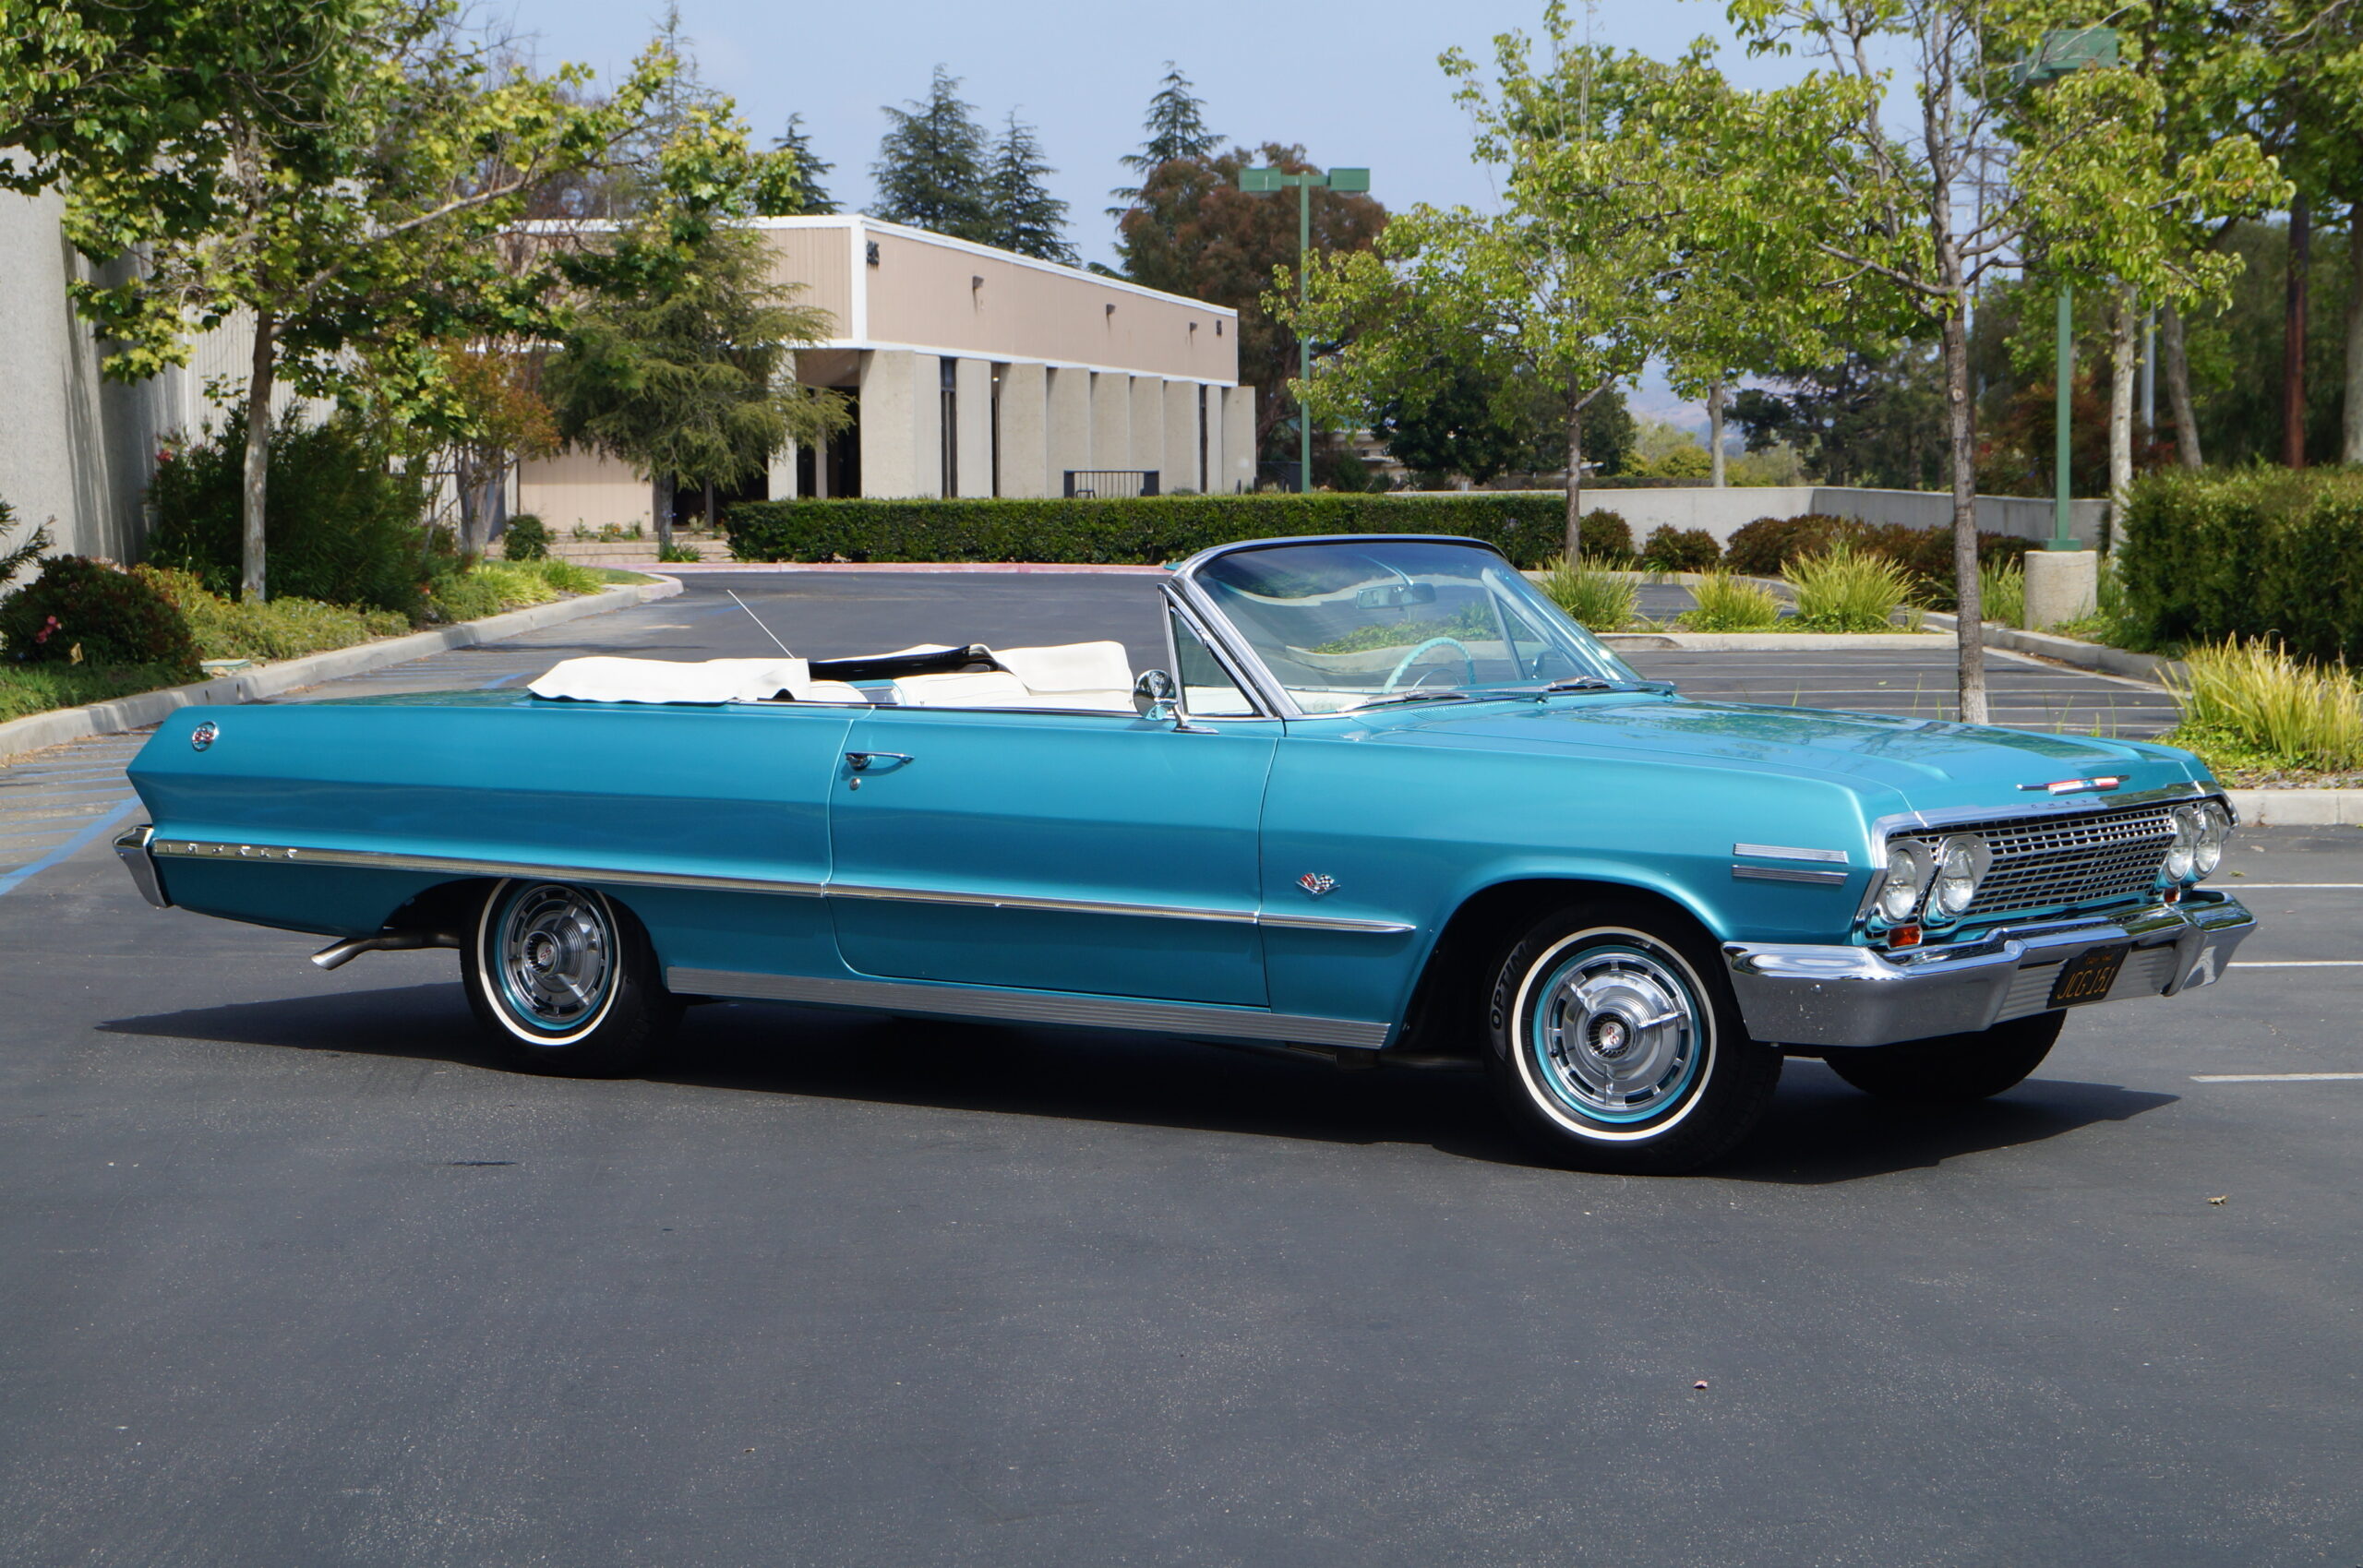 Light blue 1963 Chevy Impala - Sold at Johnston Motorsports